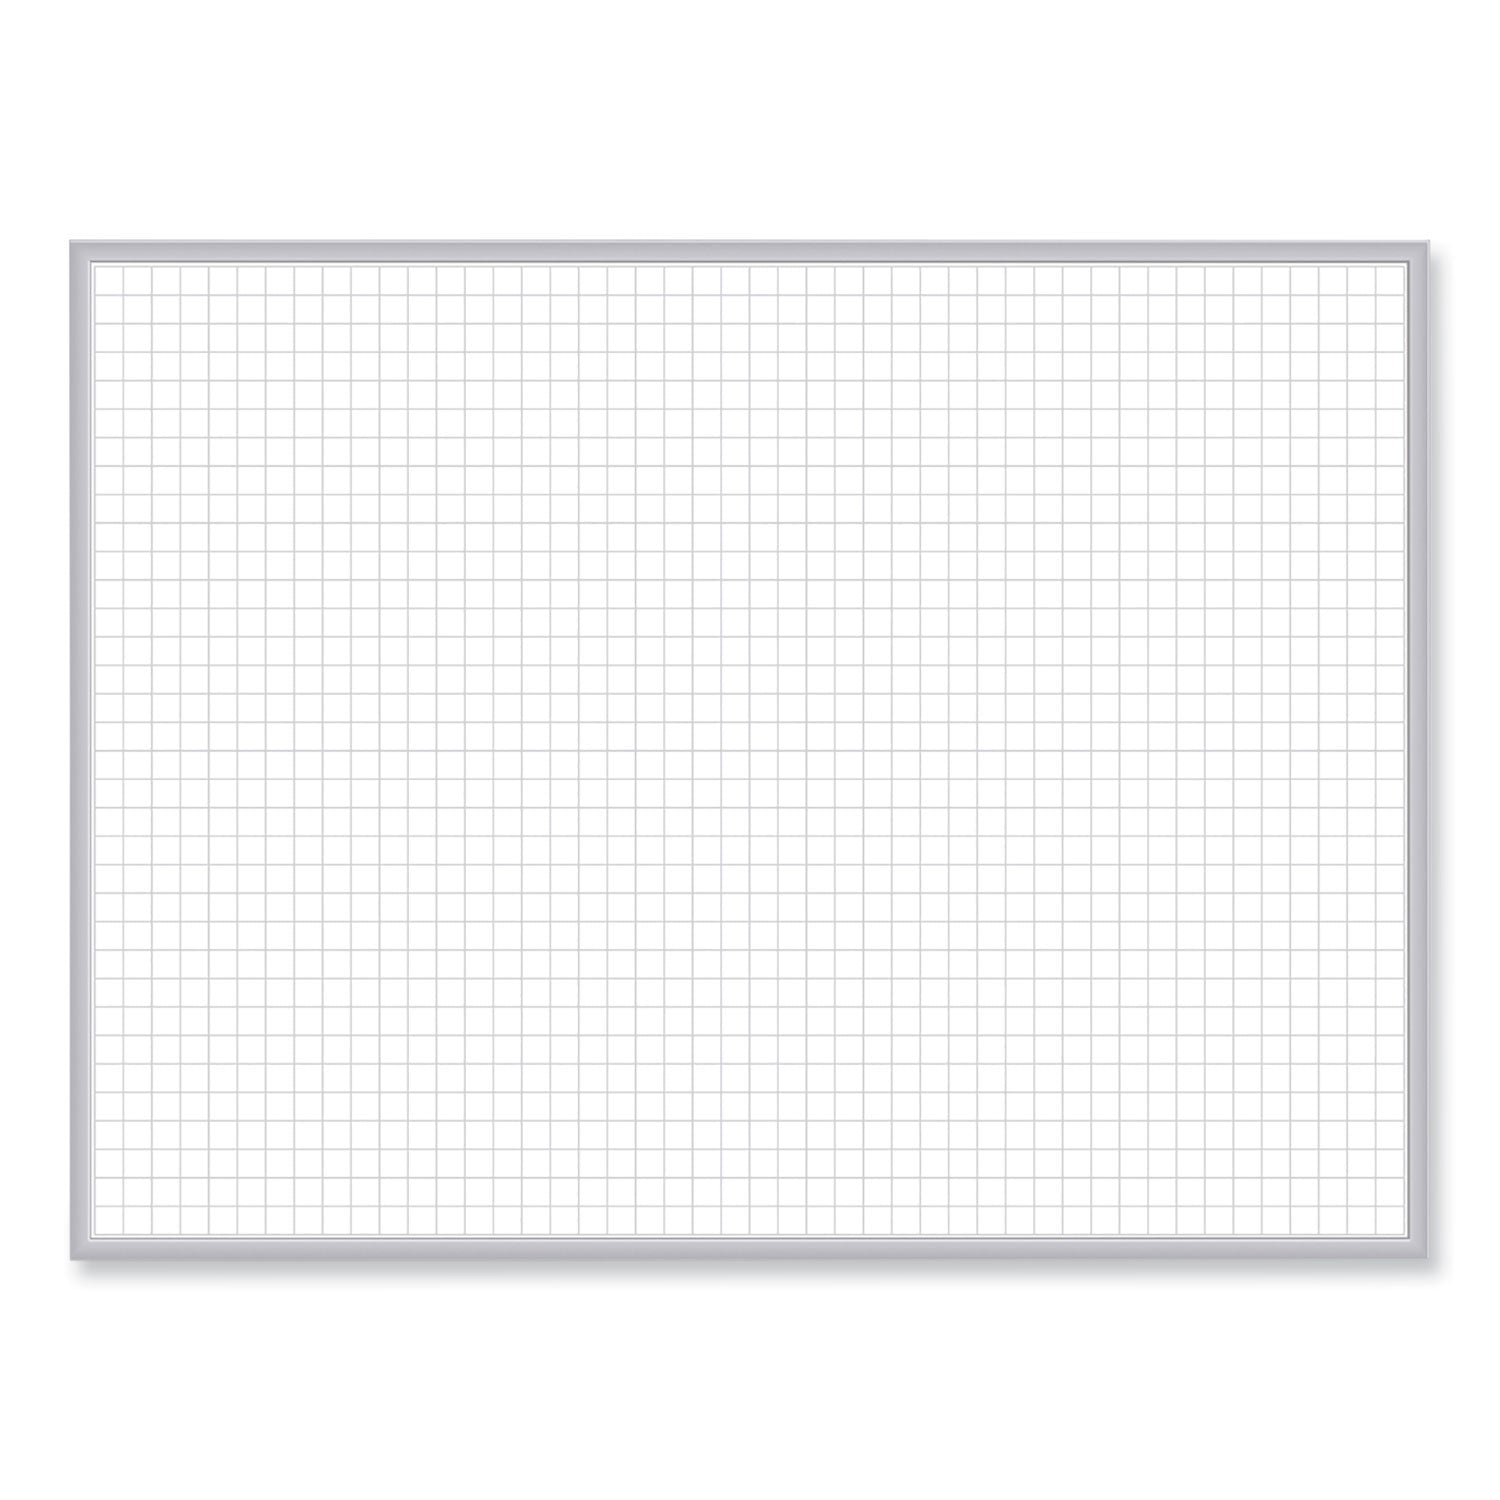 1-x-1-grid-magnetic-whiteboard-965-x-485-white-gray-surface-satin-aluminum-frame-ships-in-7-10-business-days_ghegrpm321g48 - 1